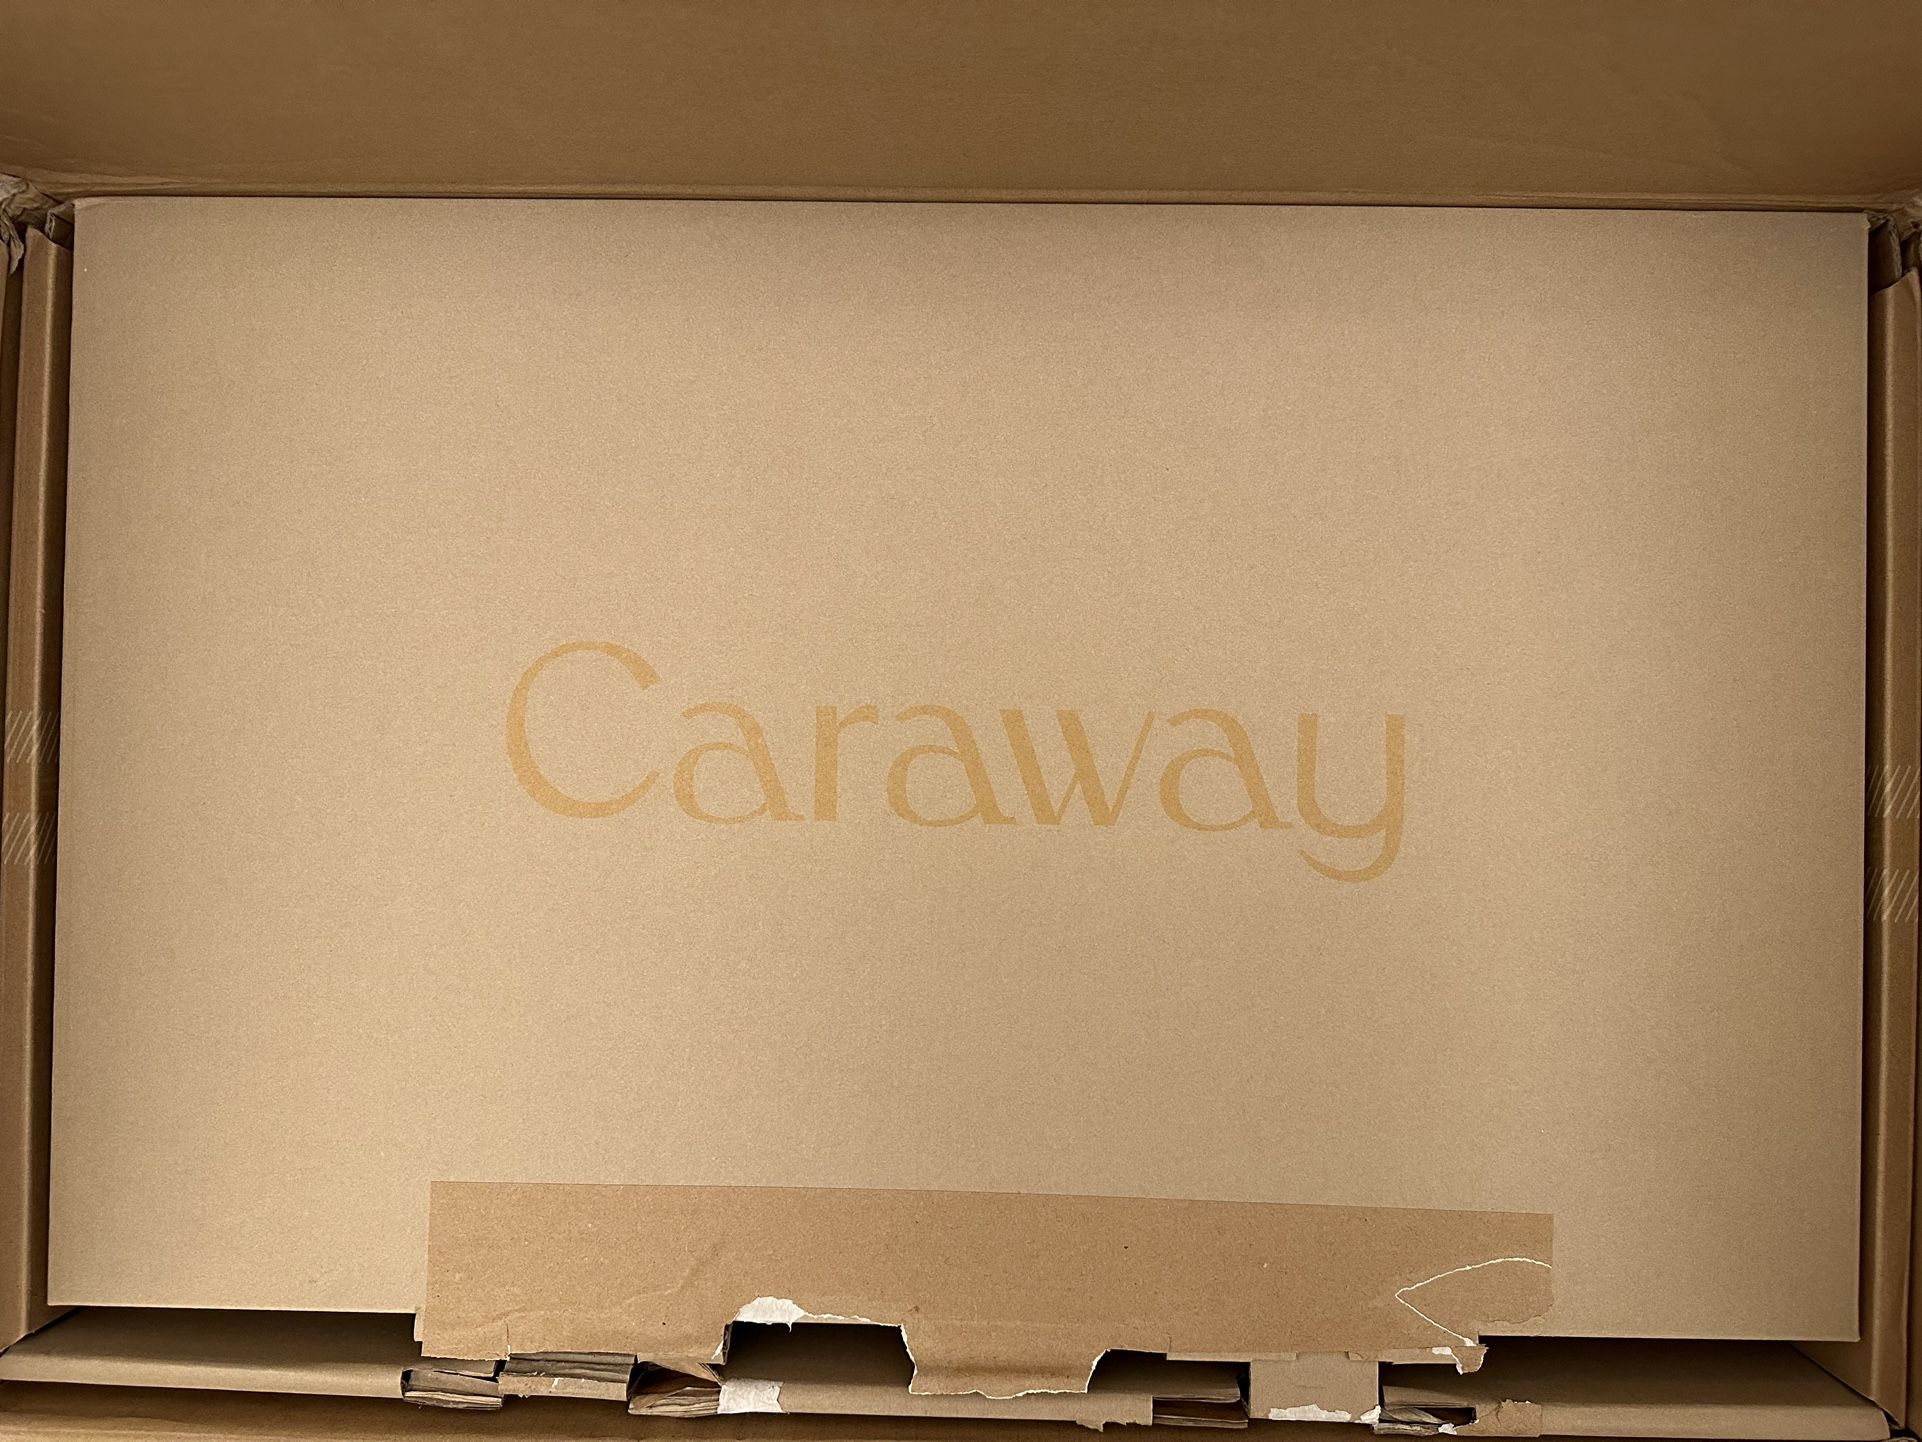 Caraway Home 7-Piece Cream Ceramic Non-Stick Cookware Set with